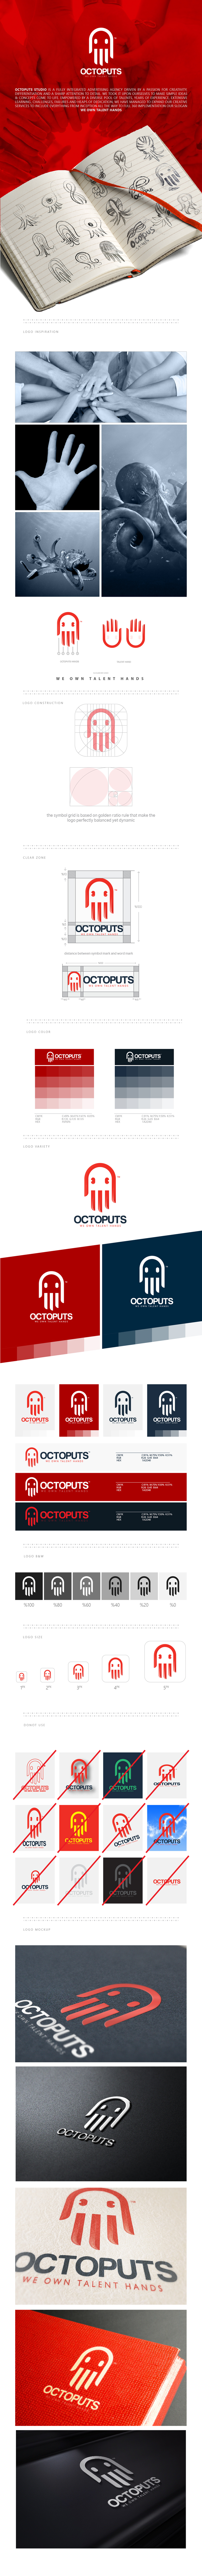 octoputs studio graphic agancy hand logo serag basel سراج باسل octoputs logo creative NAGATIVE SPACE Golden Ratio Logo presentation